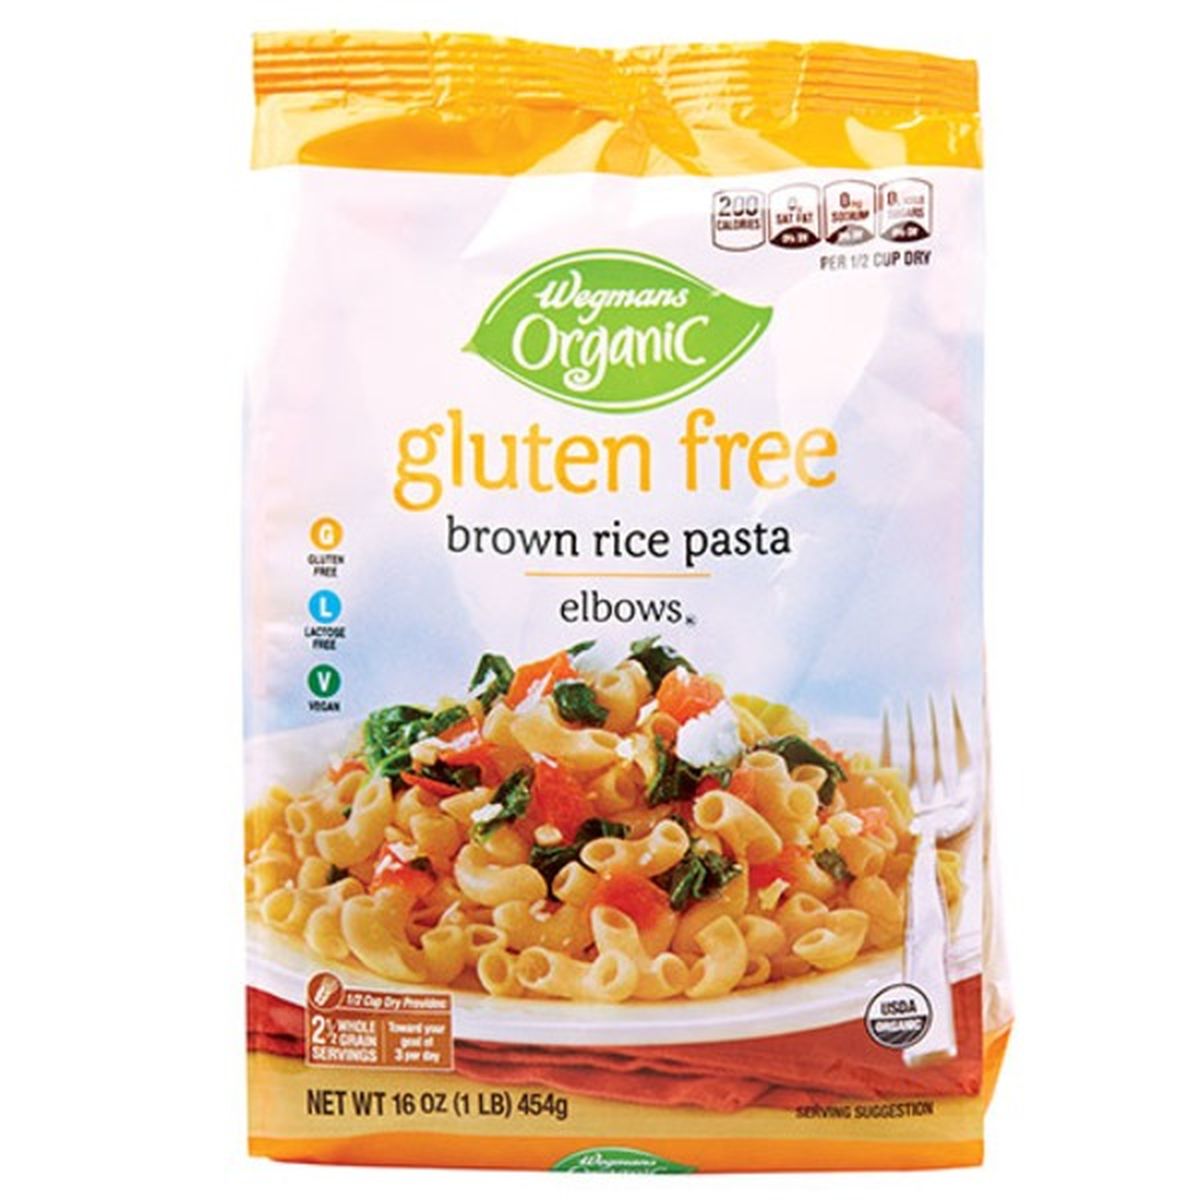 Calories in Wegmans Organic Gluten Free Brown Rice Elbows Pasta